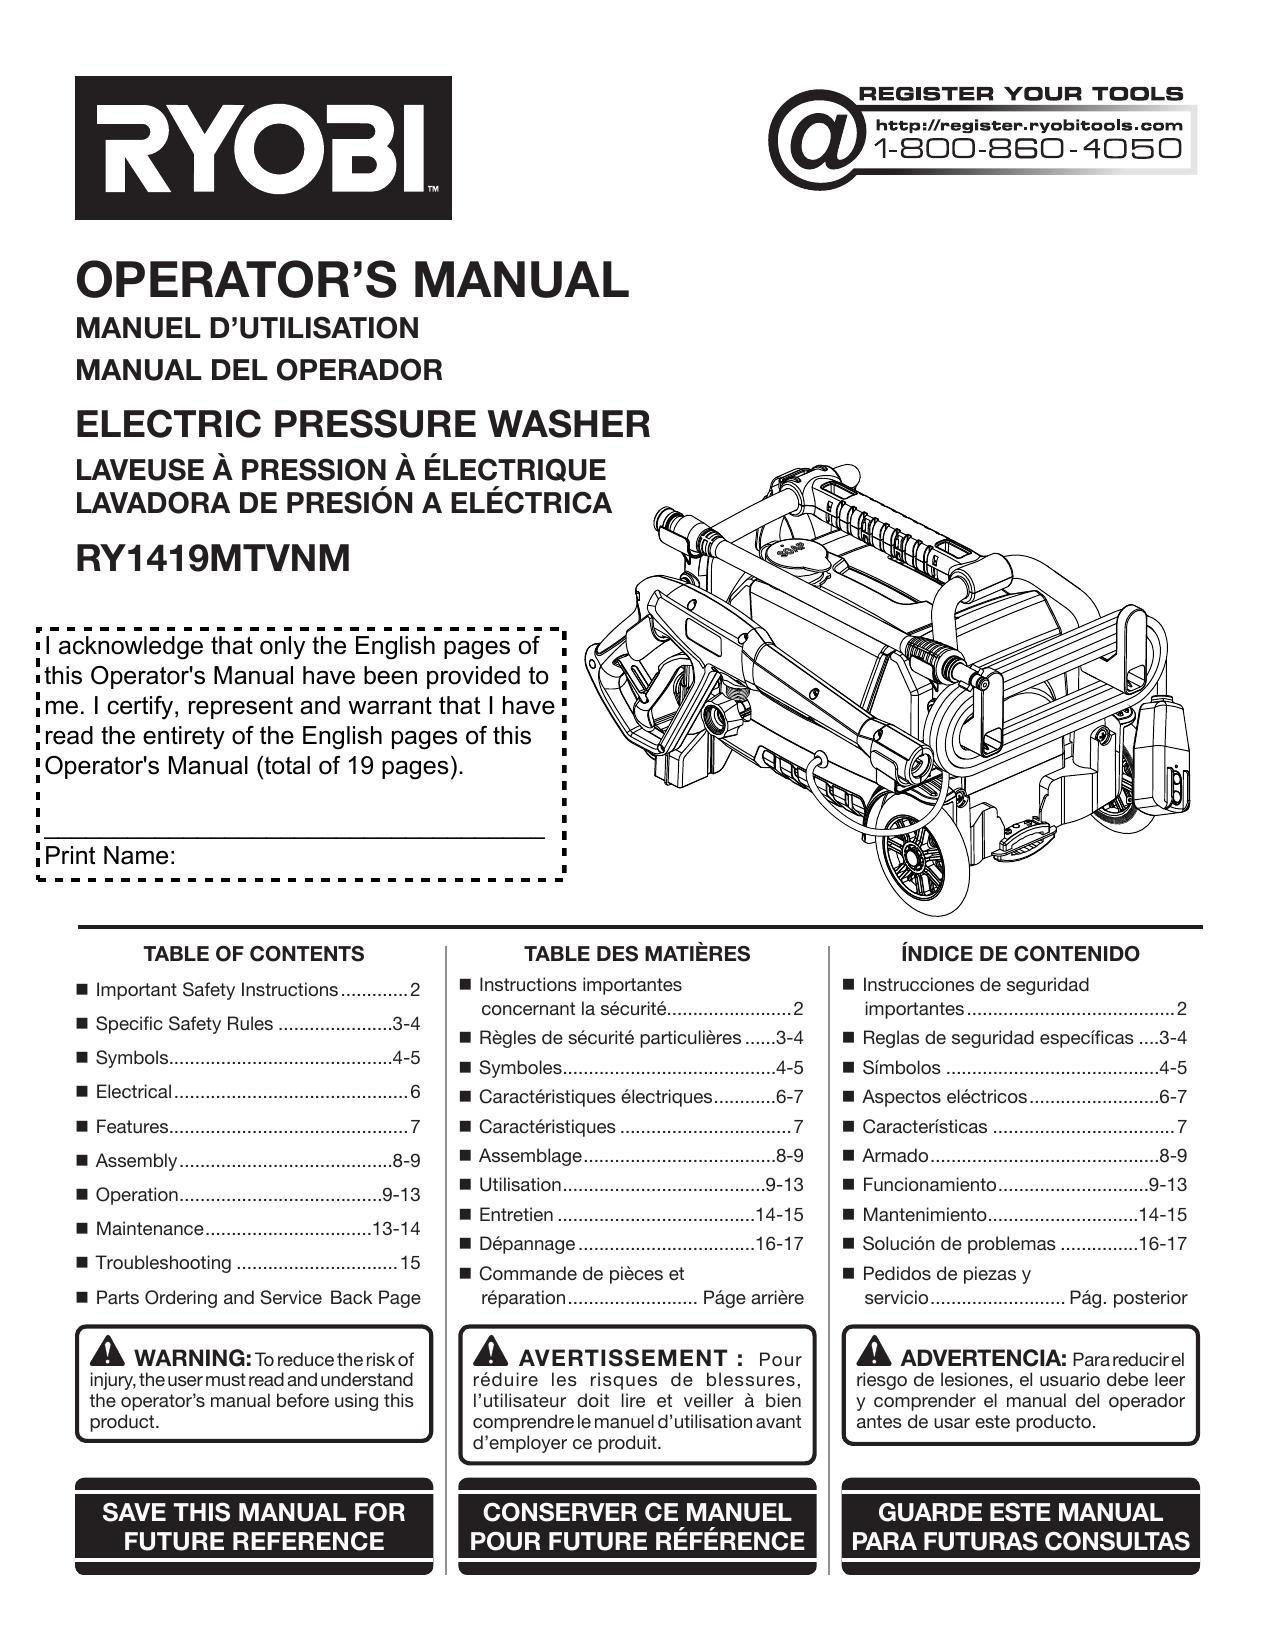 ryobi-operators-manual-electric-pressure-washer-ry141imtvnm.pdf